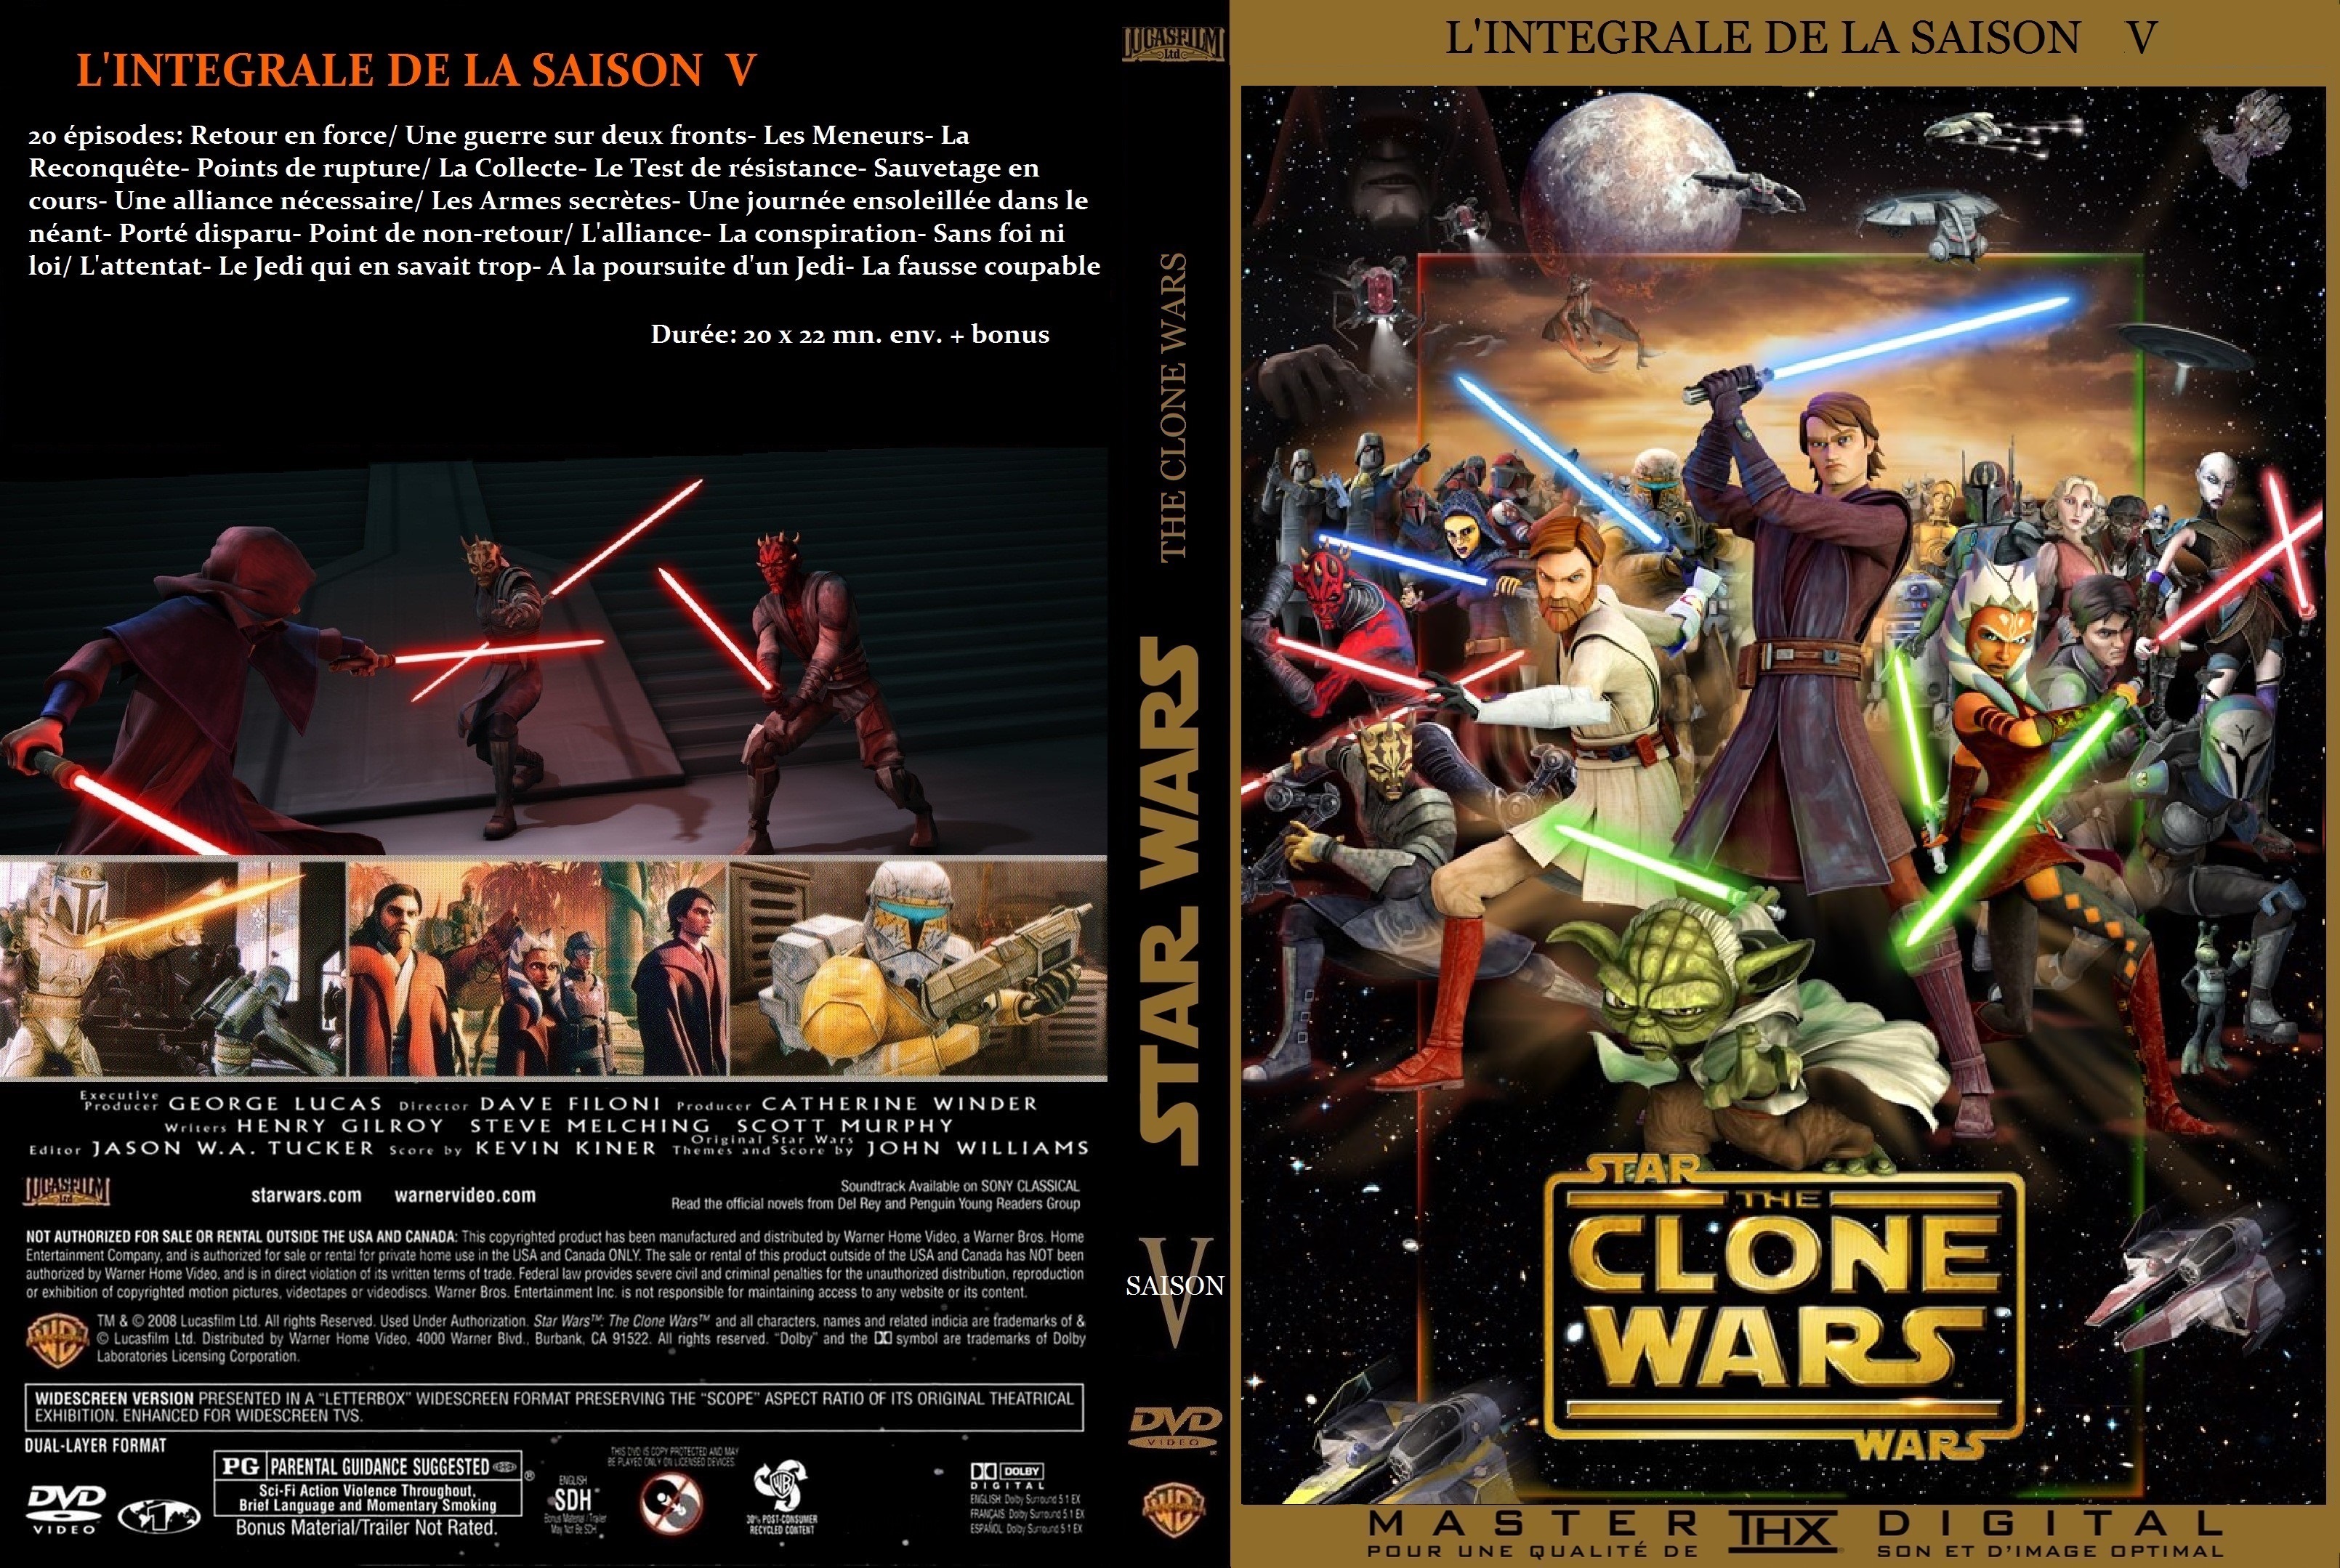 Jaquette DVD Star Wars The Clone Wars Saison 5 custom